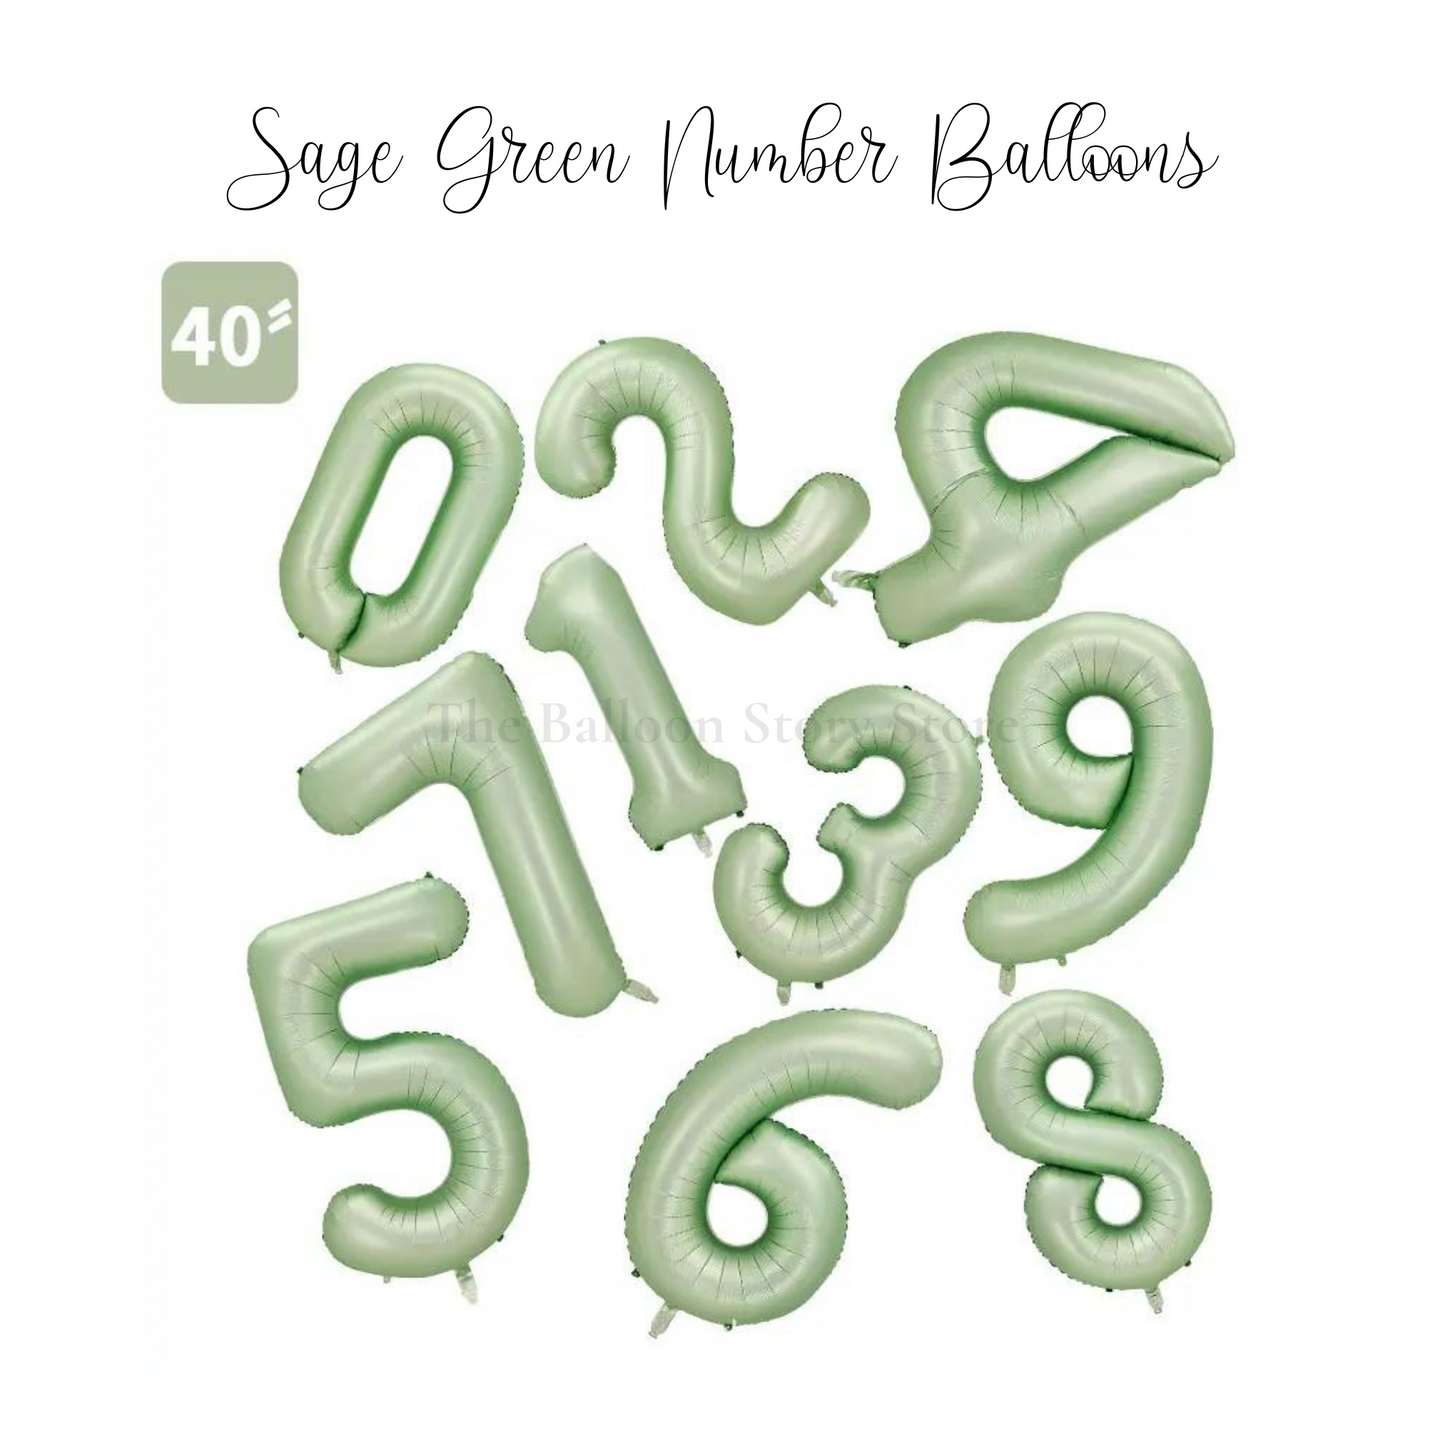 40" Sage Green Number Balloons